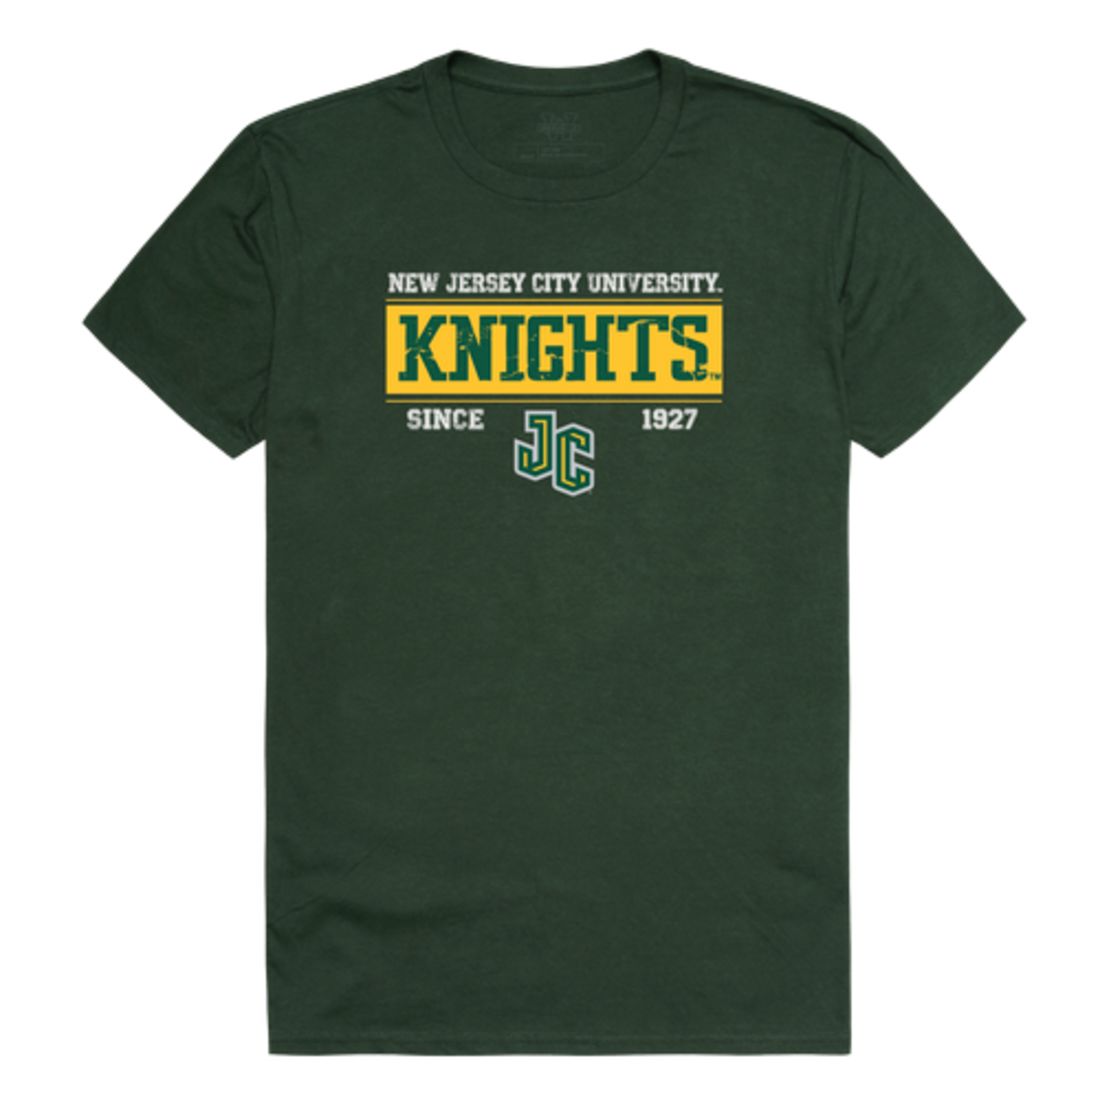 New Jersey City University Knights Established T-Shirt Tee